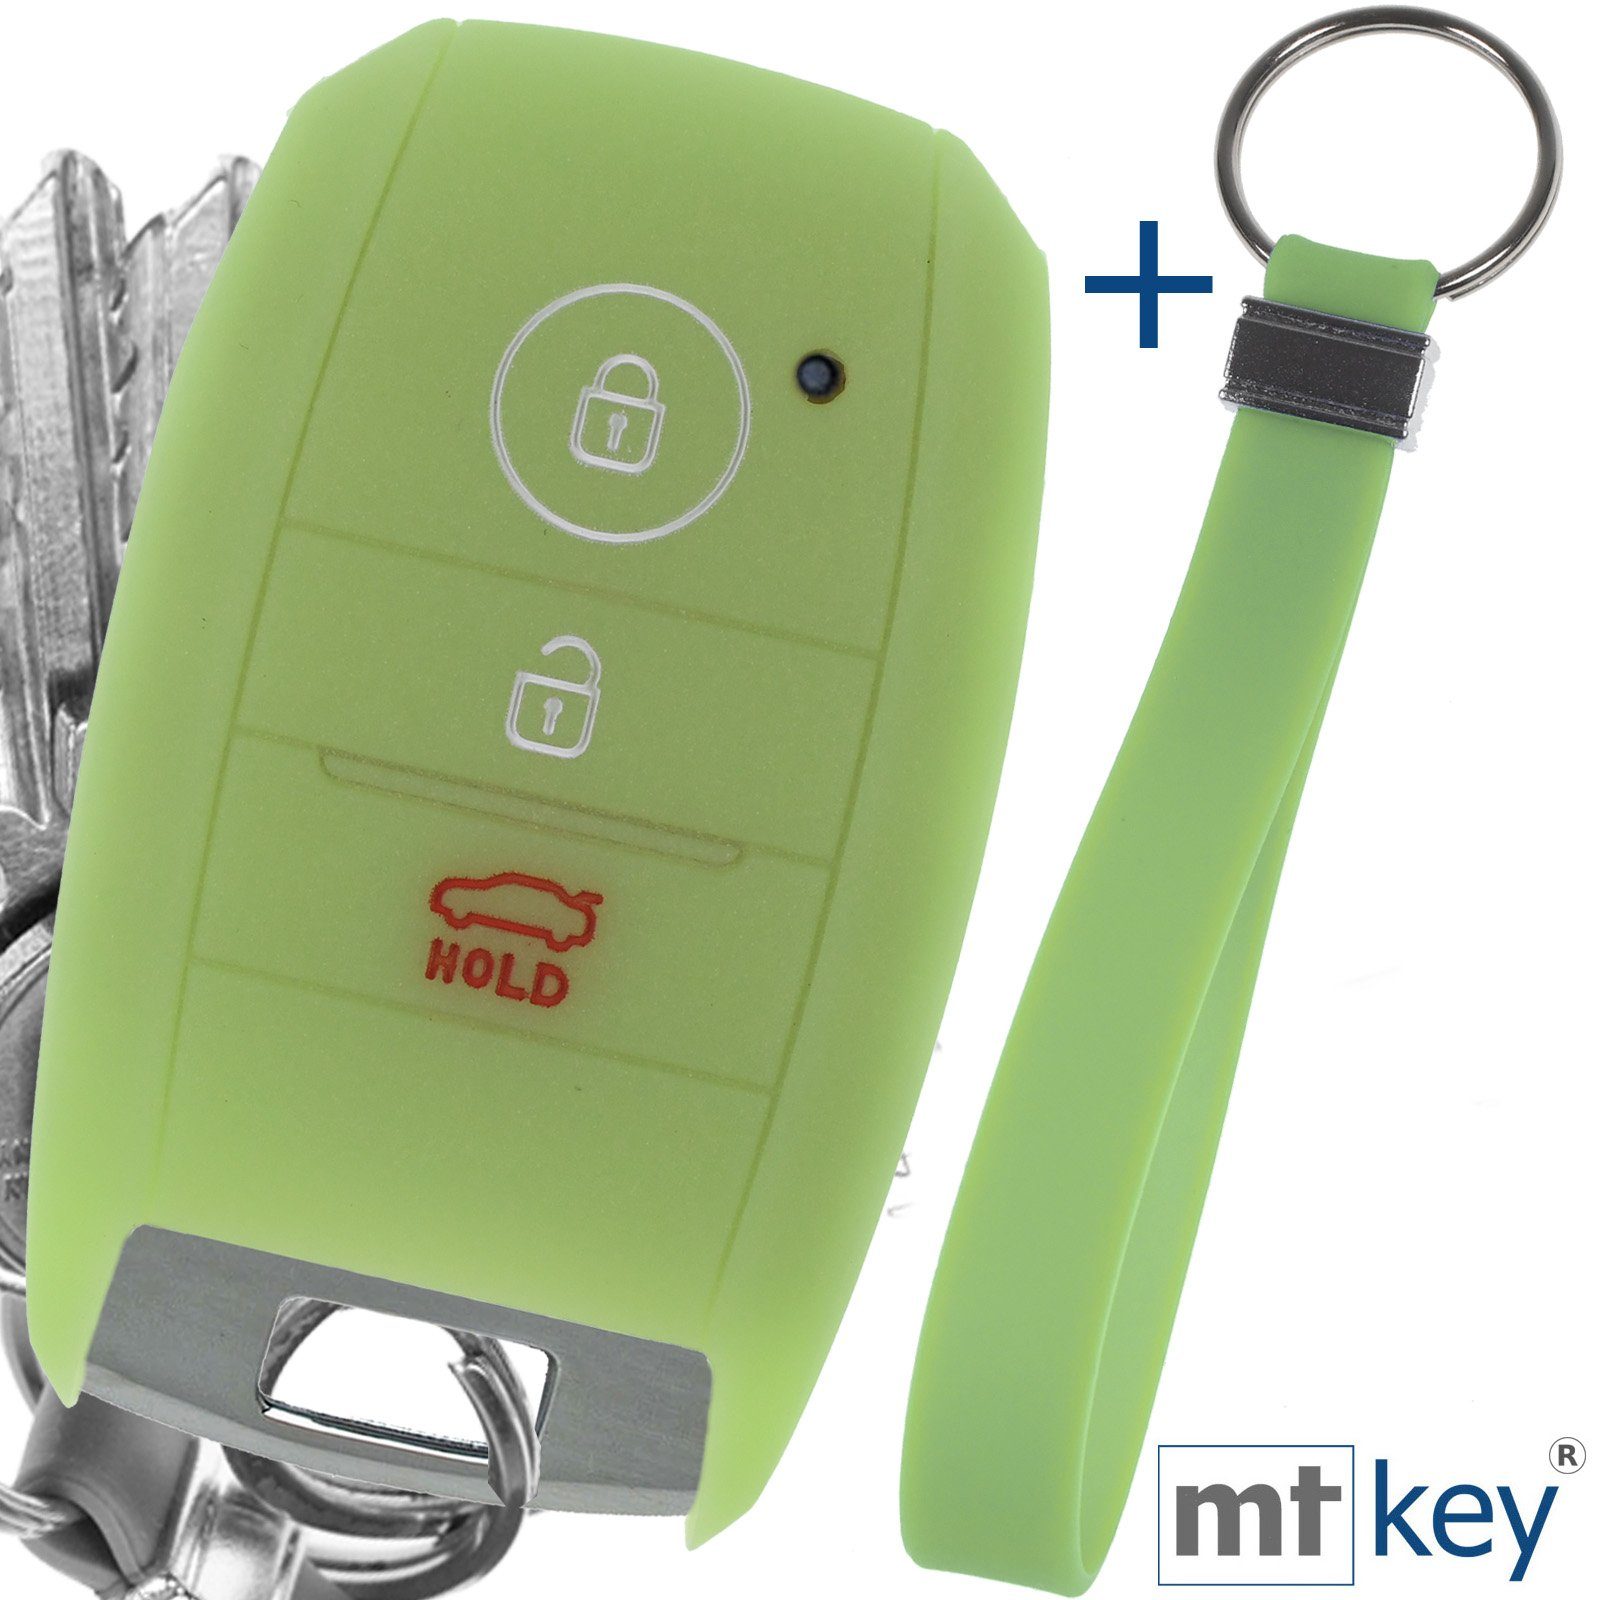 mt-key Schlüsseltasche Autoschlüssel Silikon Schutzhülle fluoreszierend Grün + Schlüsselband, für KIA Picantio Rio Ceed Soul Sportage Stonic 3 Tasten KEYLESS